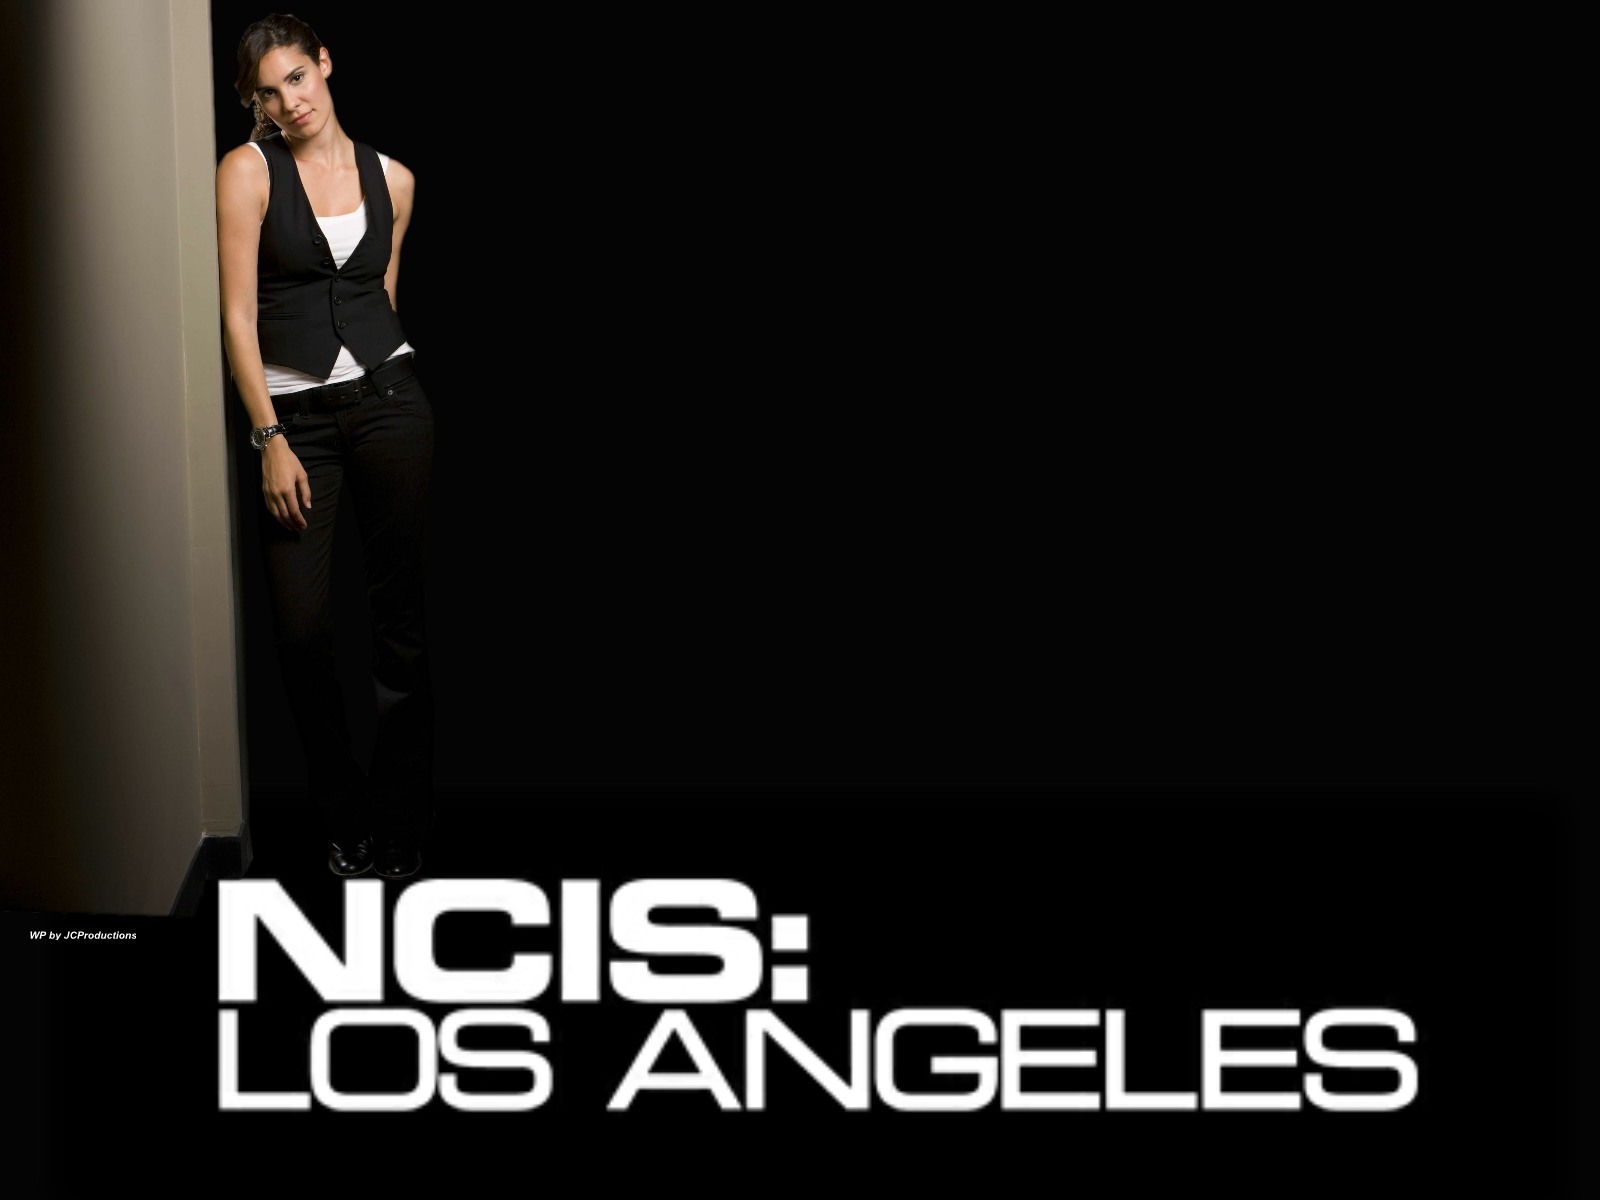 NCIS Los Angeles - NCIS: Los Angeles Wallpaper (26126771) - Fanpop